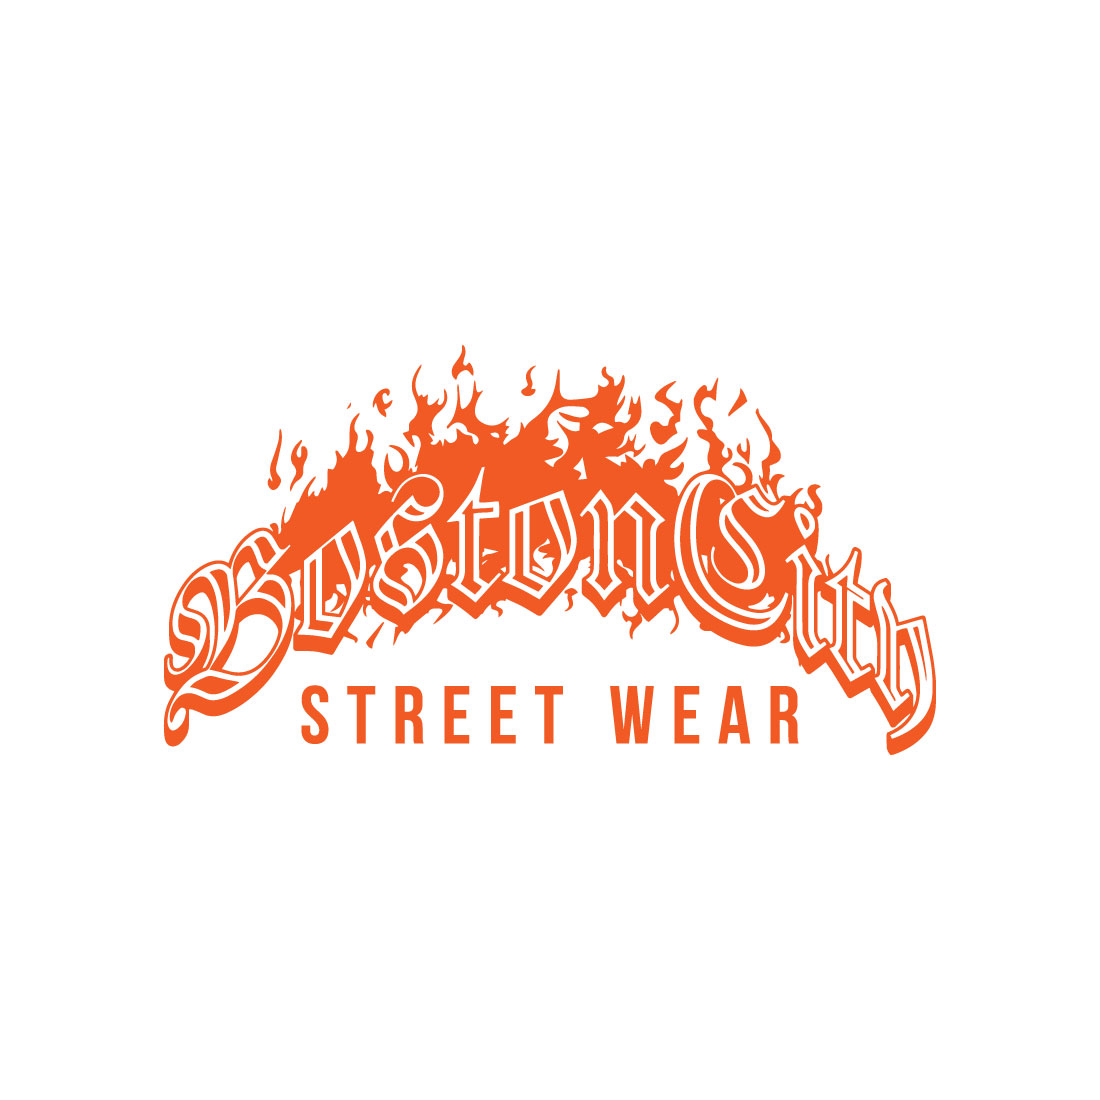 Boston City Fire Street Wear T Shirt Design preview image.